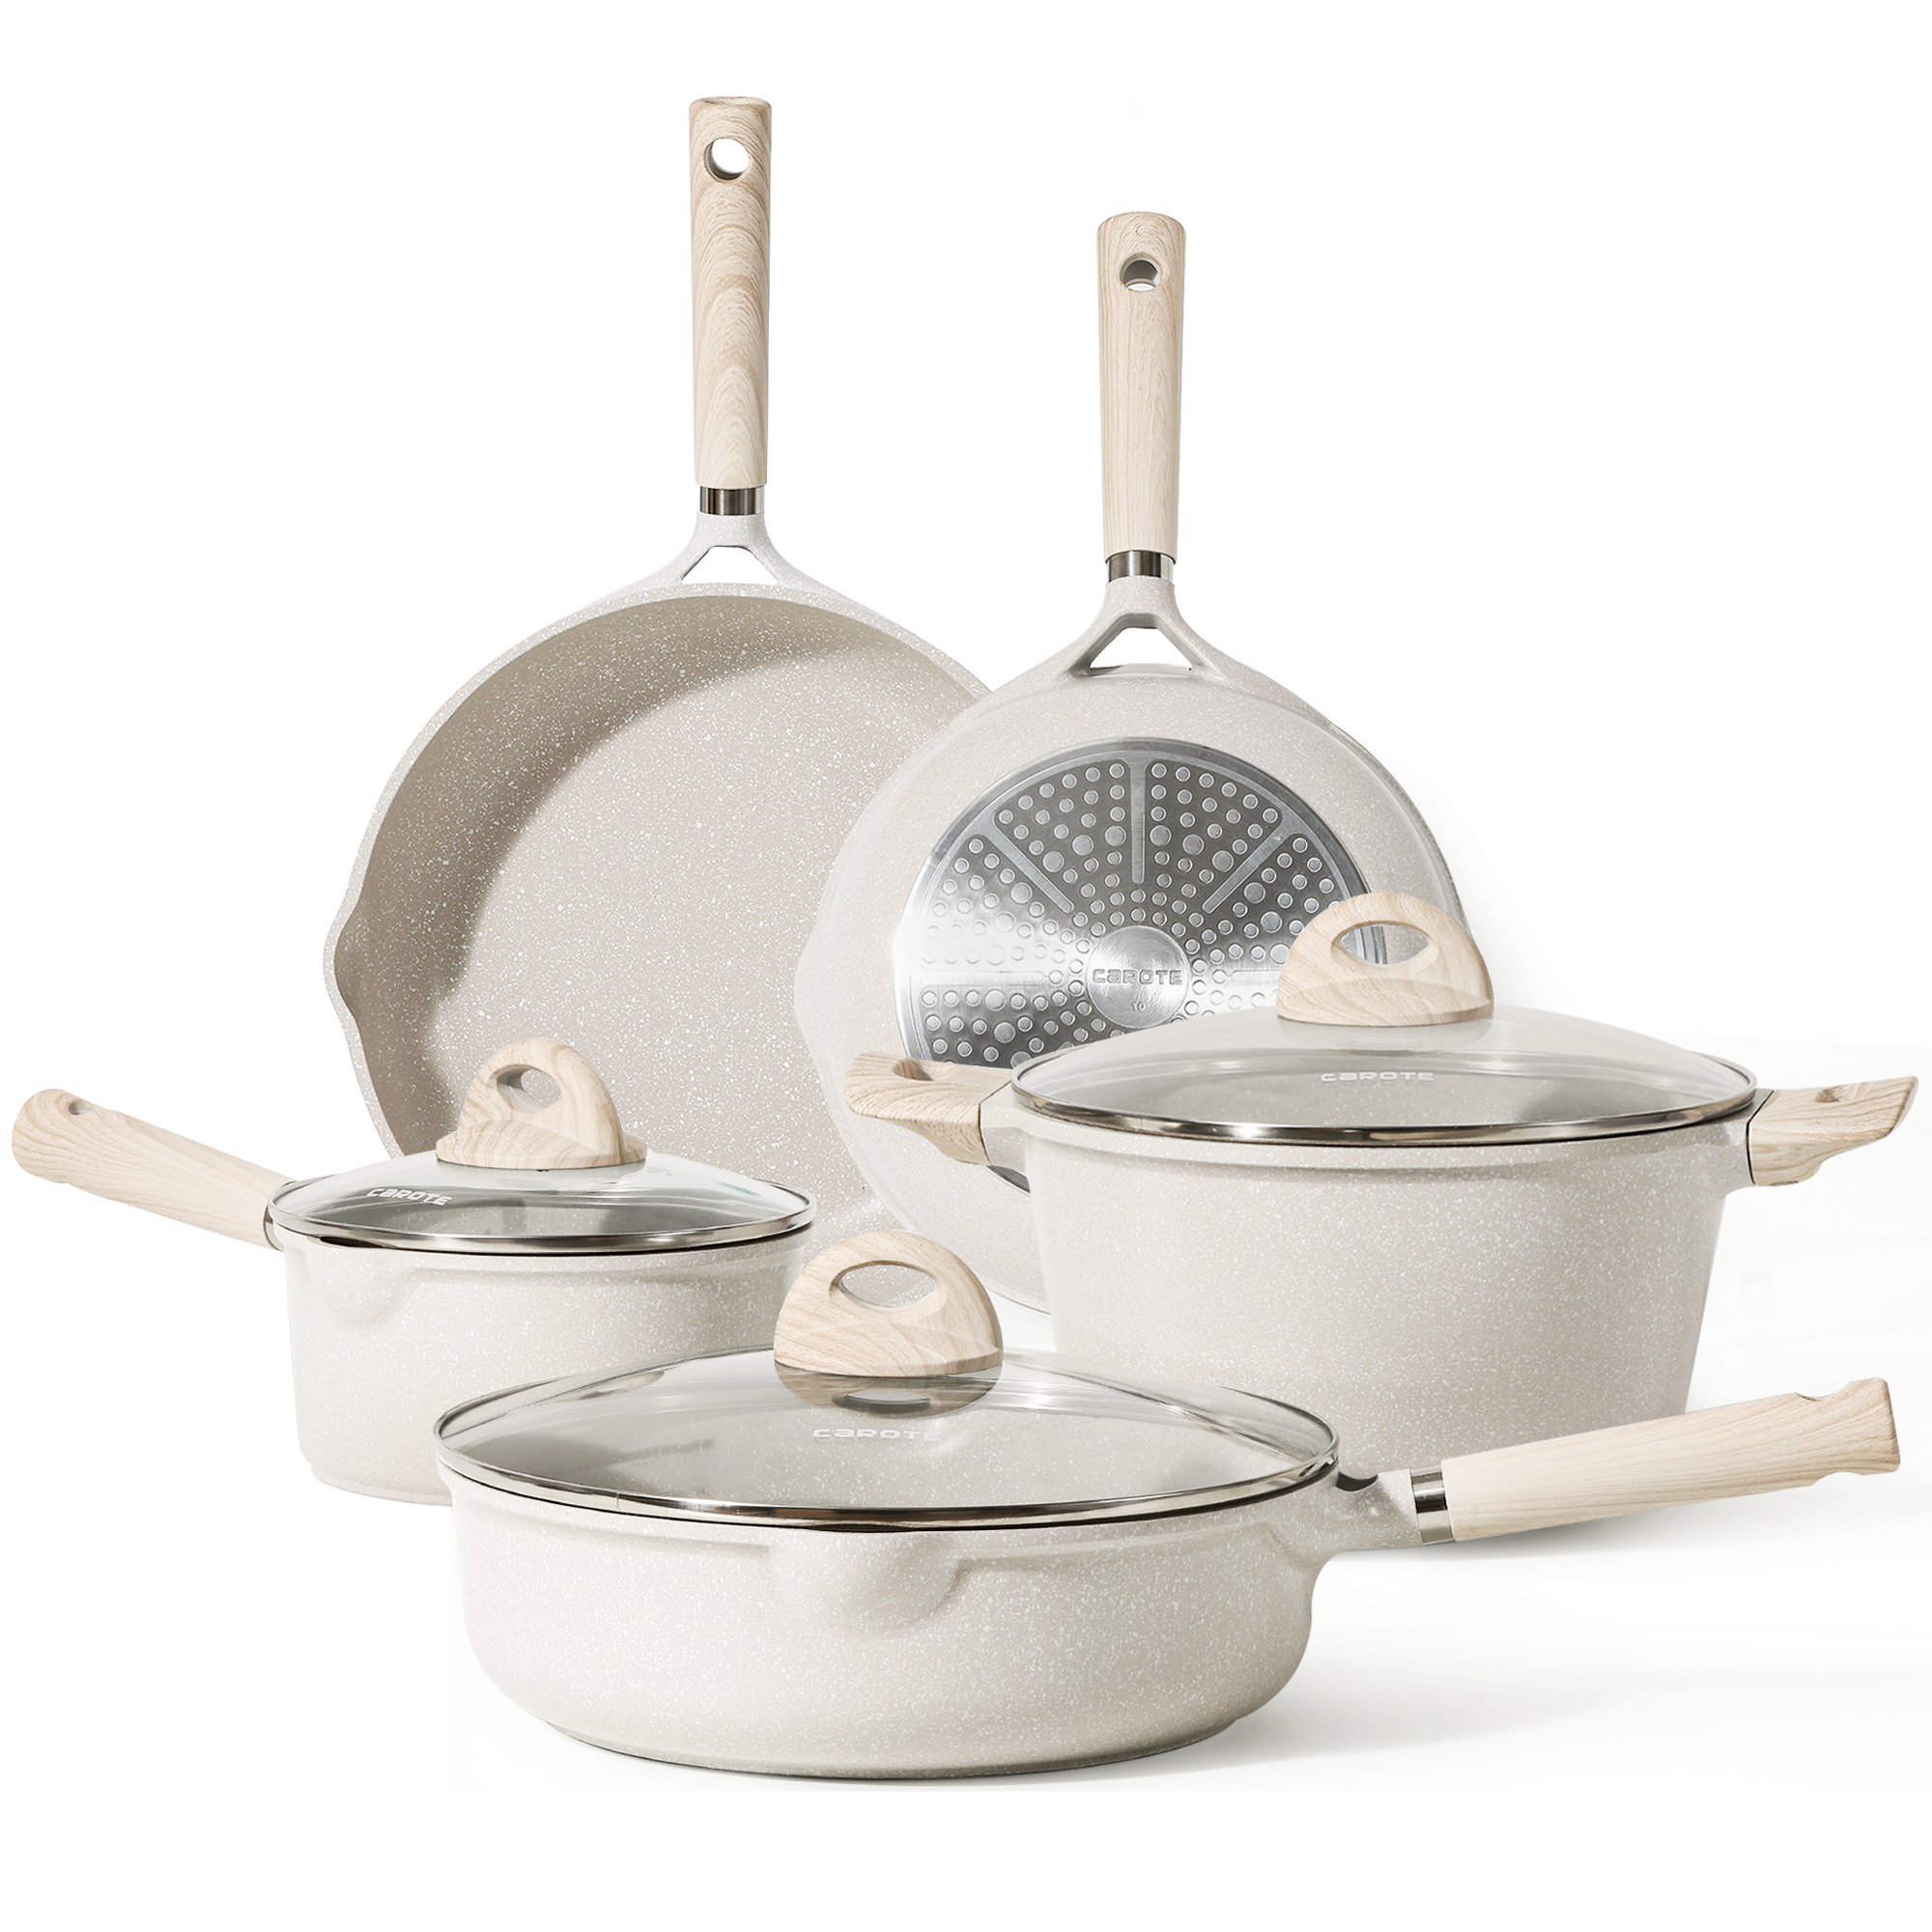 Carote Nonstick Pots and Pans Set, 8 Pcs Induction Kitchen Cookware Sets (Beige Granite) - image 1 of 8